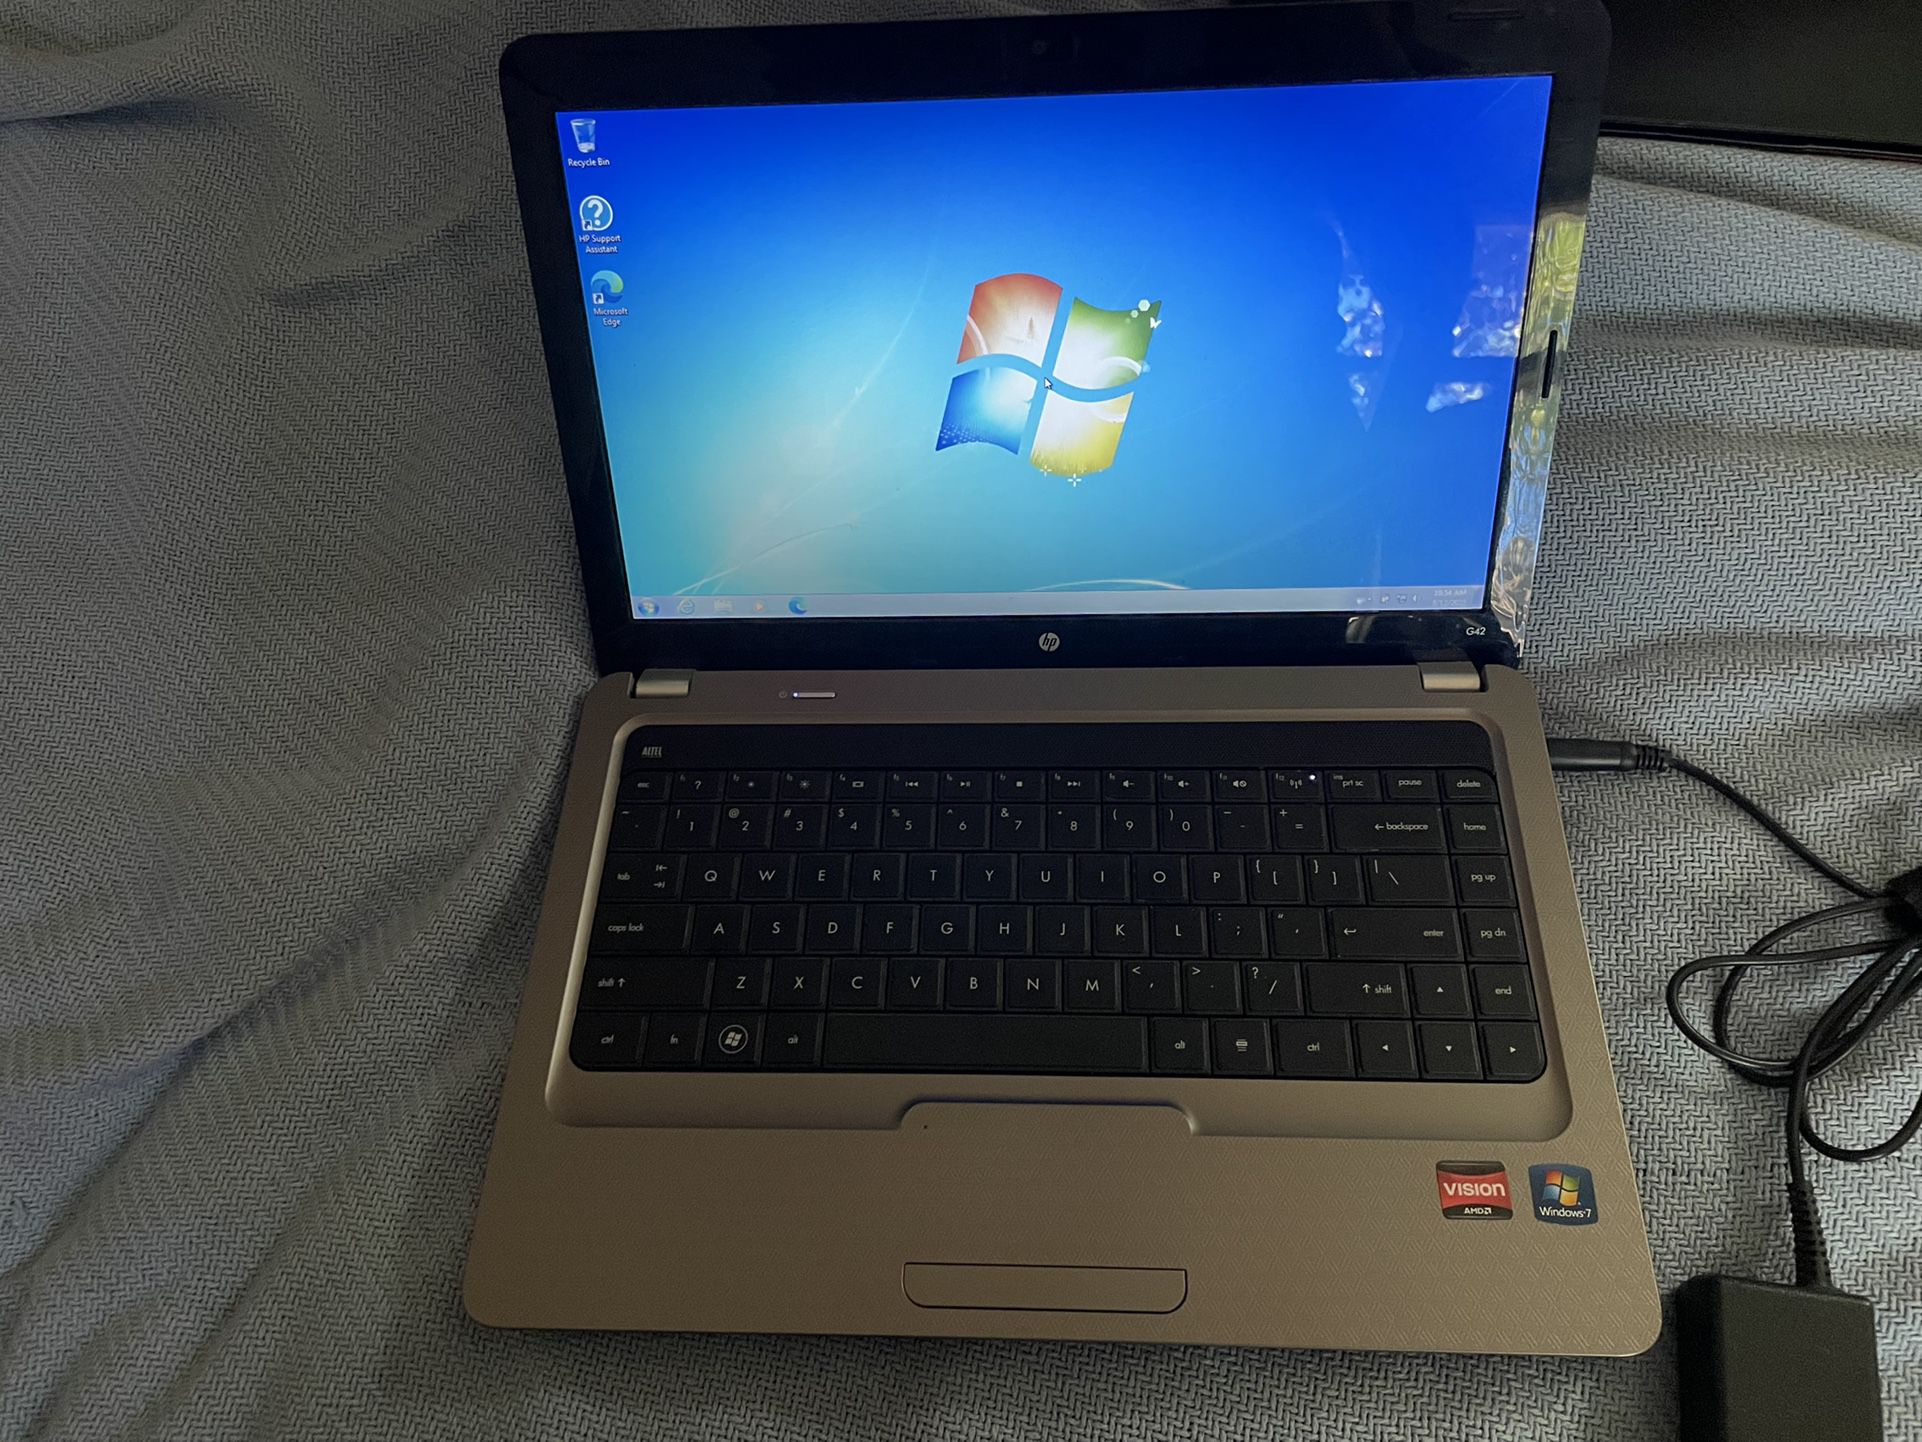 HP G42 Laptop